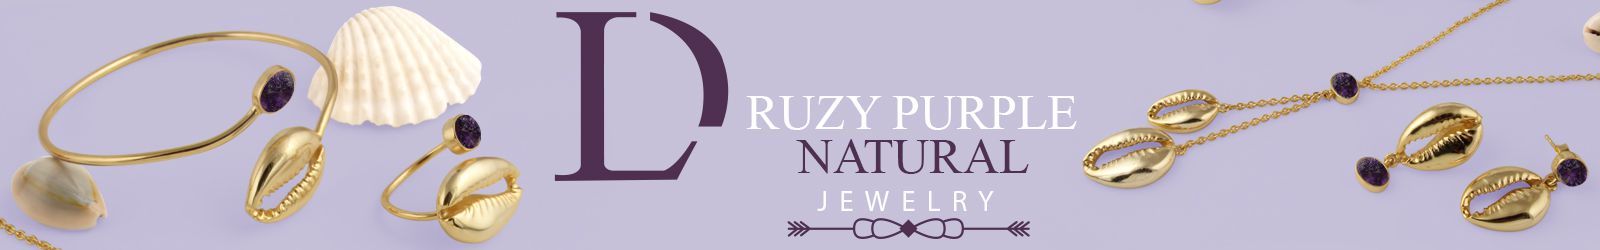 Silver Druzy Purple Natural Jewelry Wholesale Supplier